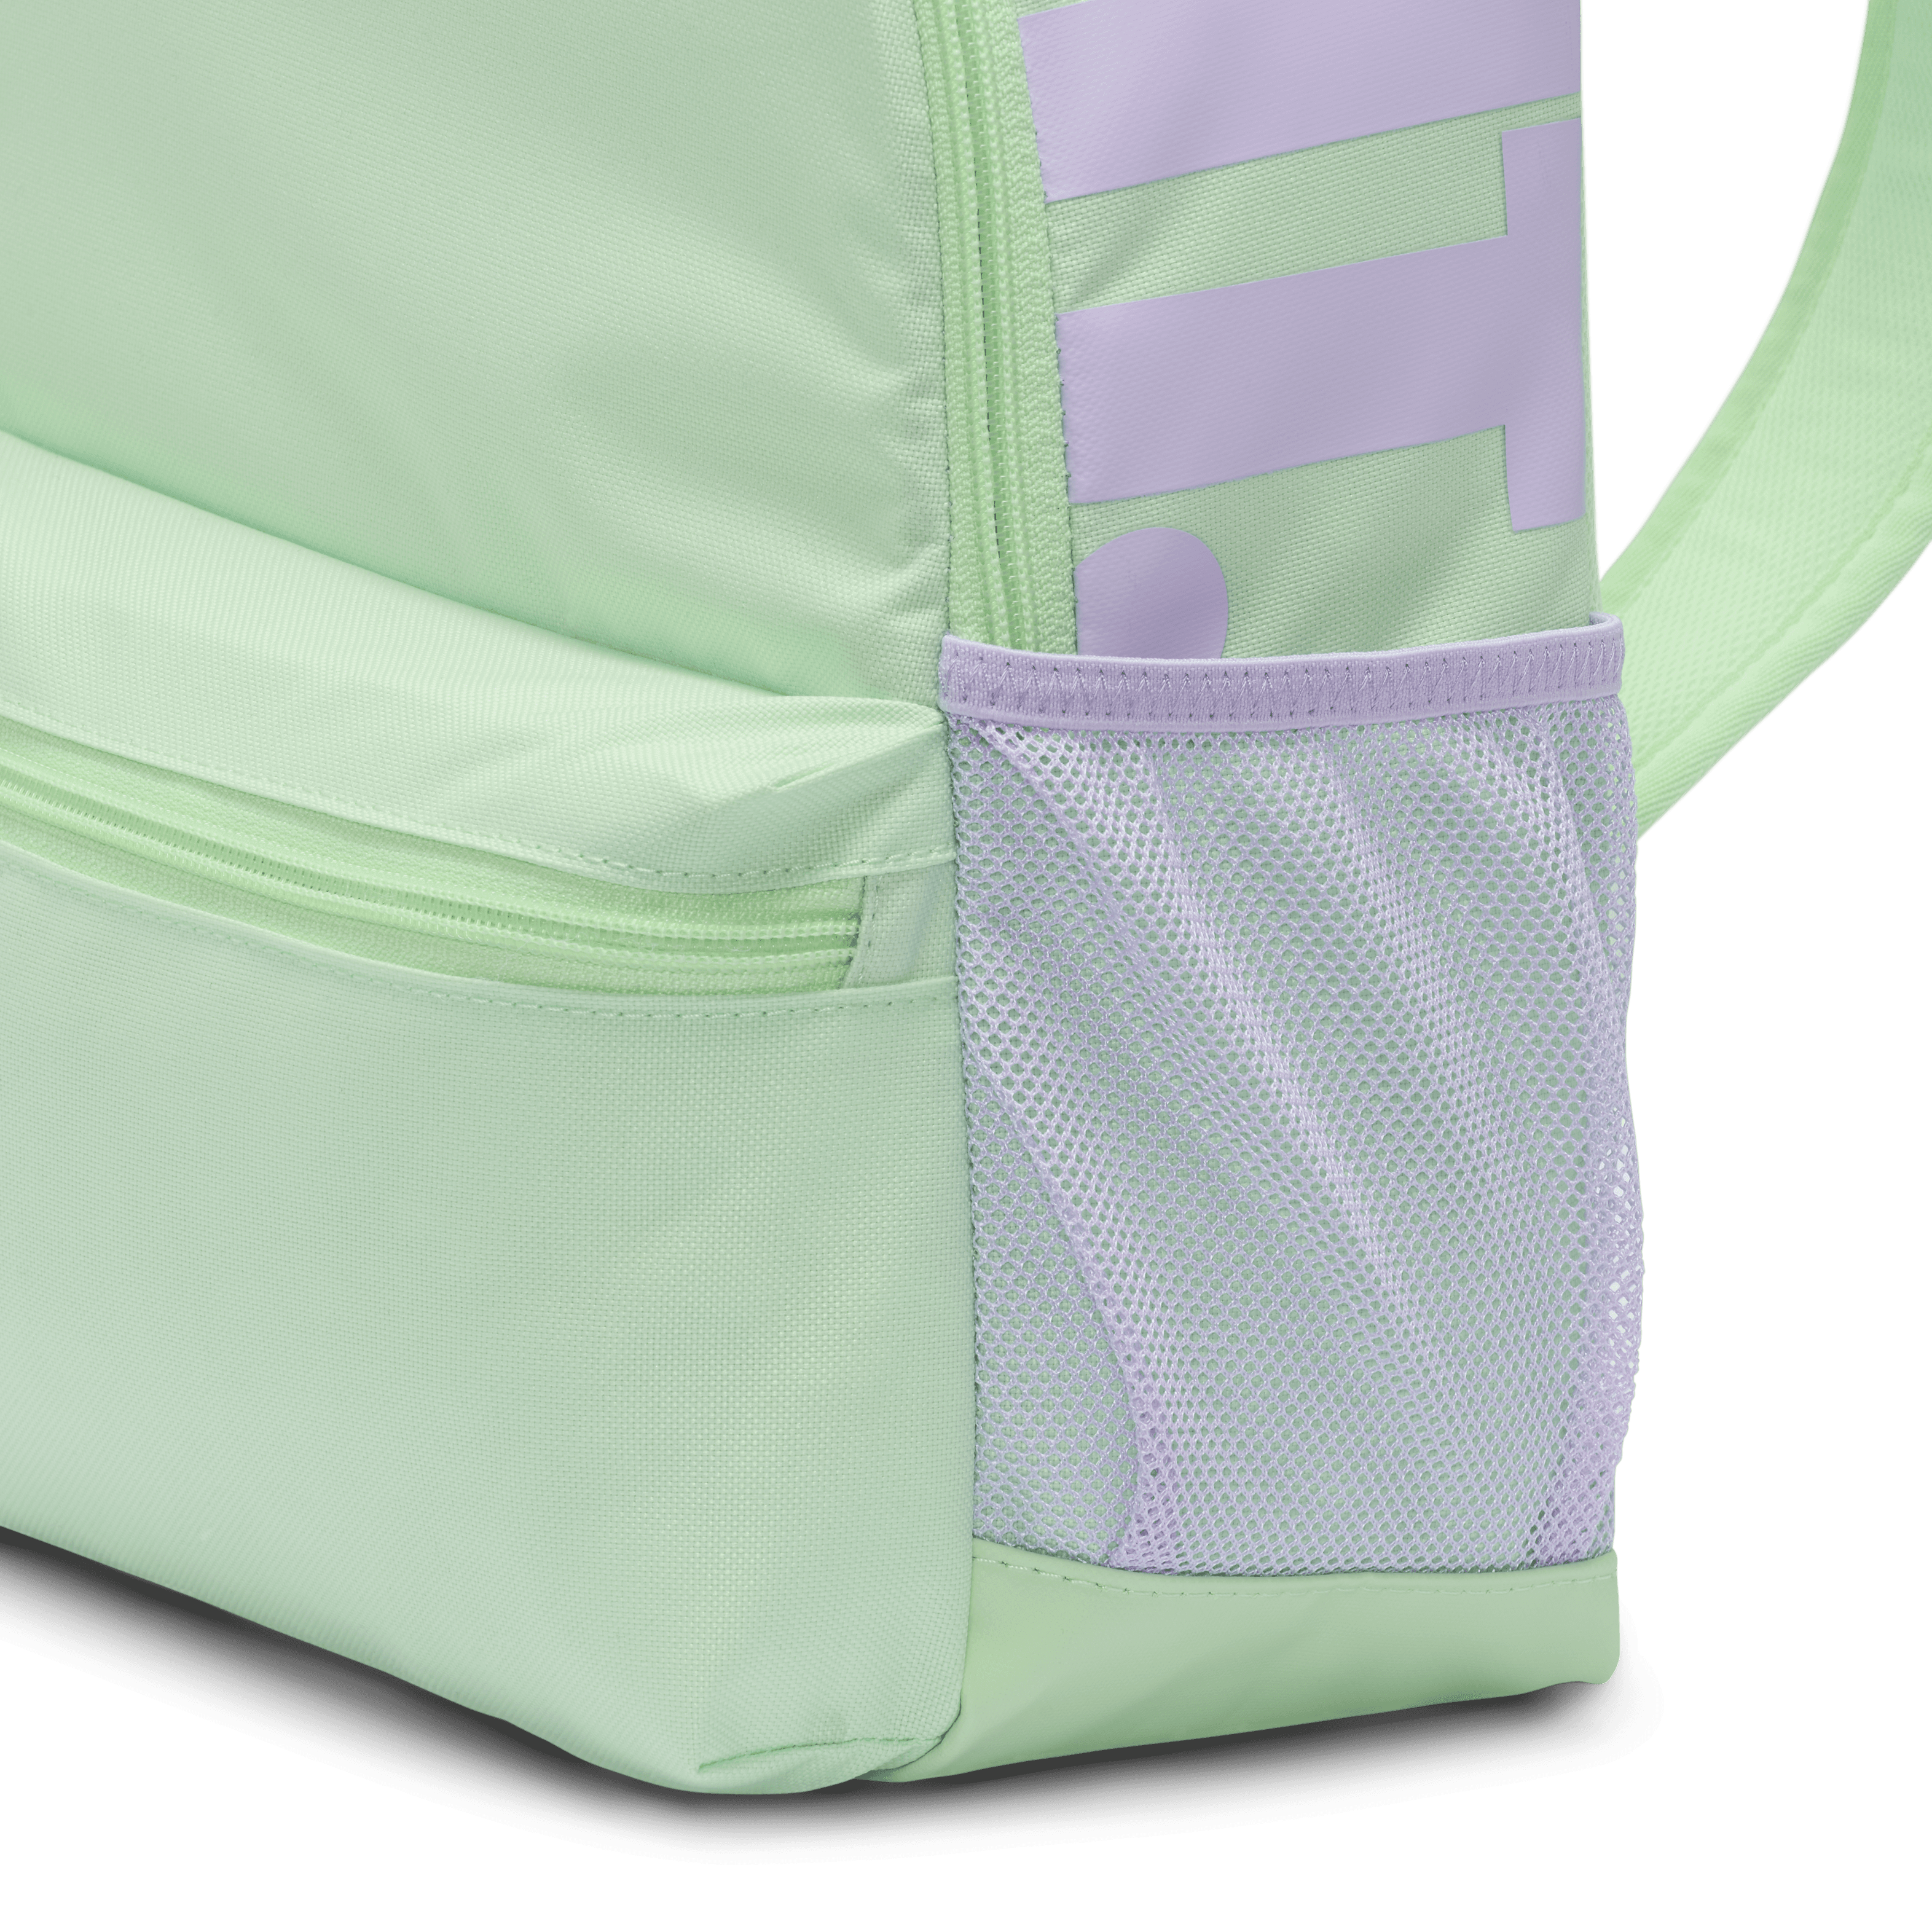 Nike Kids Brasilia JDI Mini Backpack-Apor Green/Lilac Bloom/White